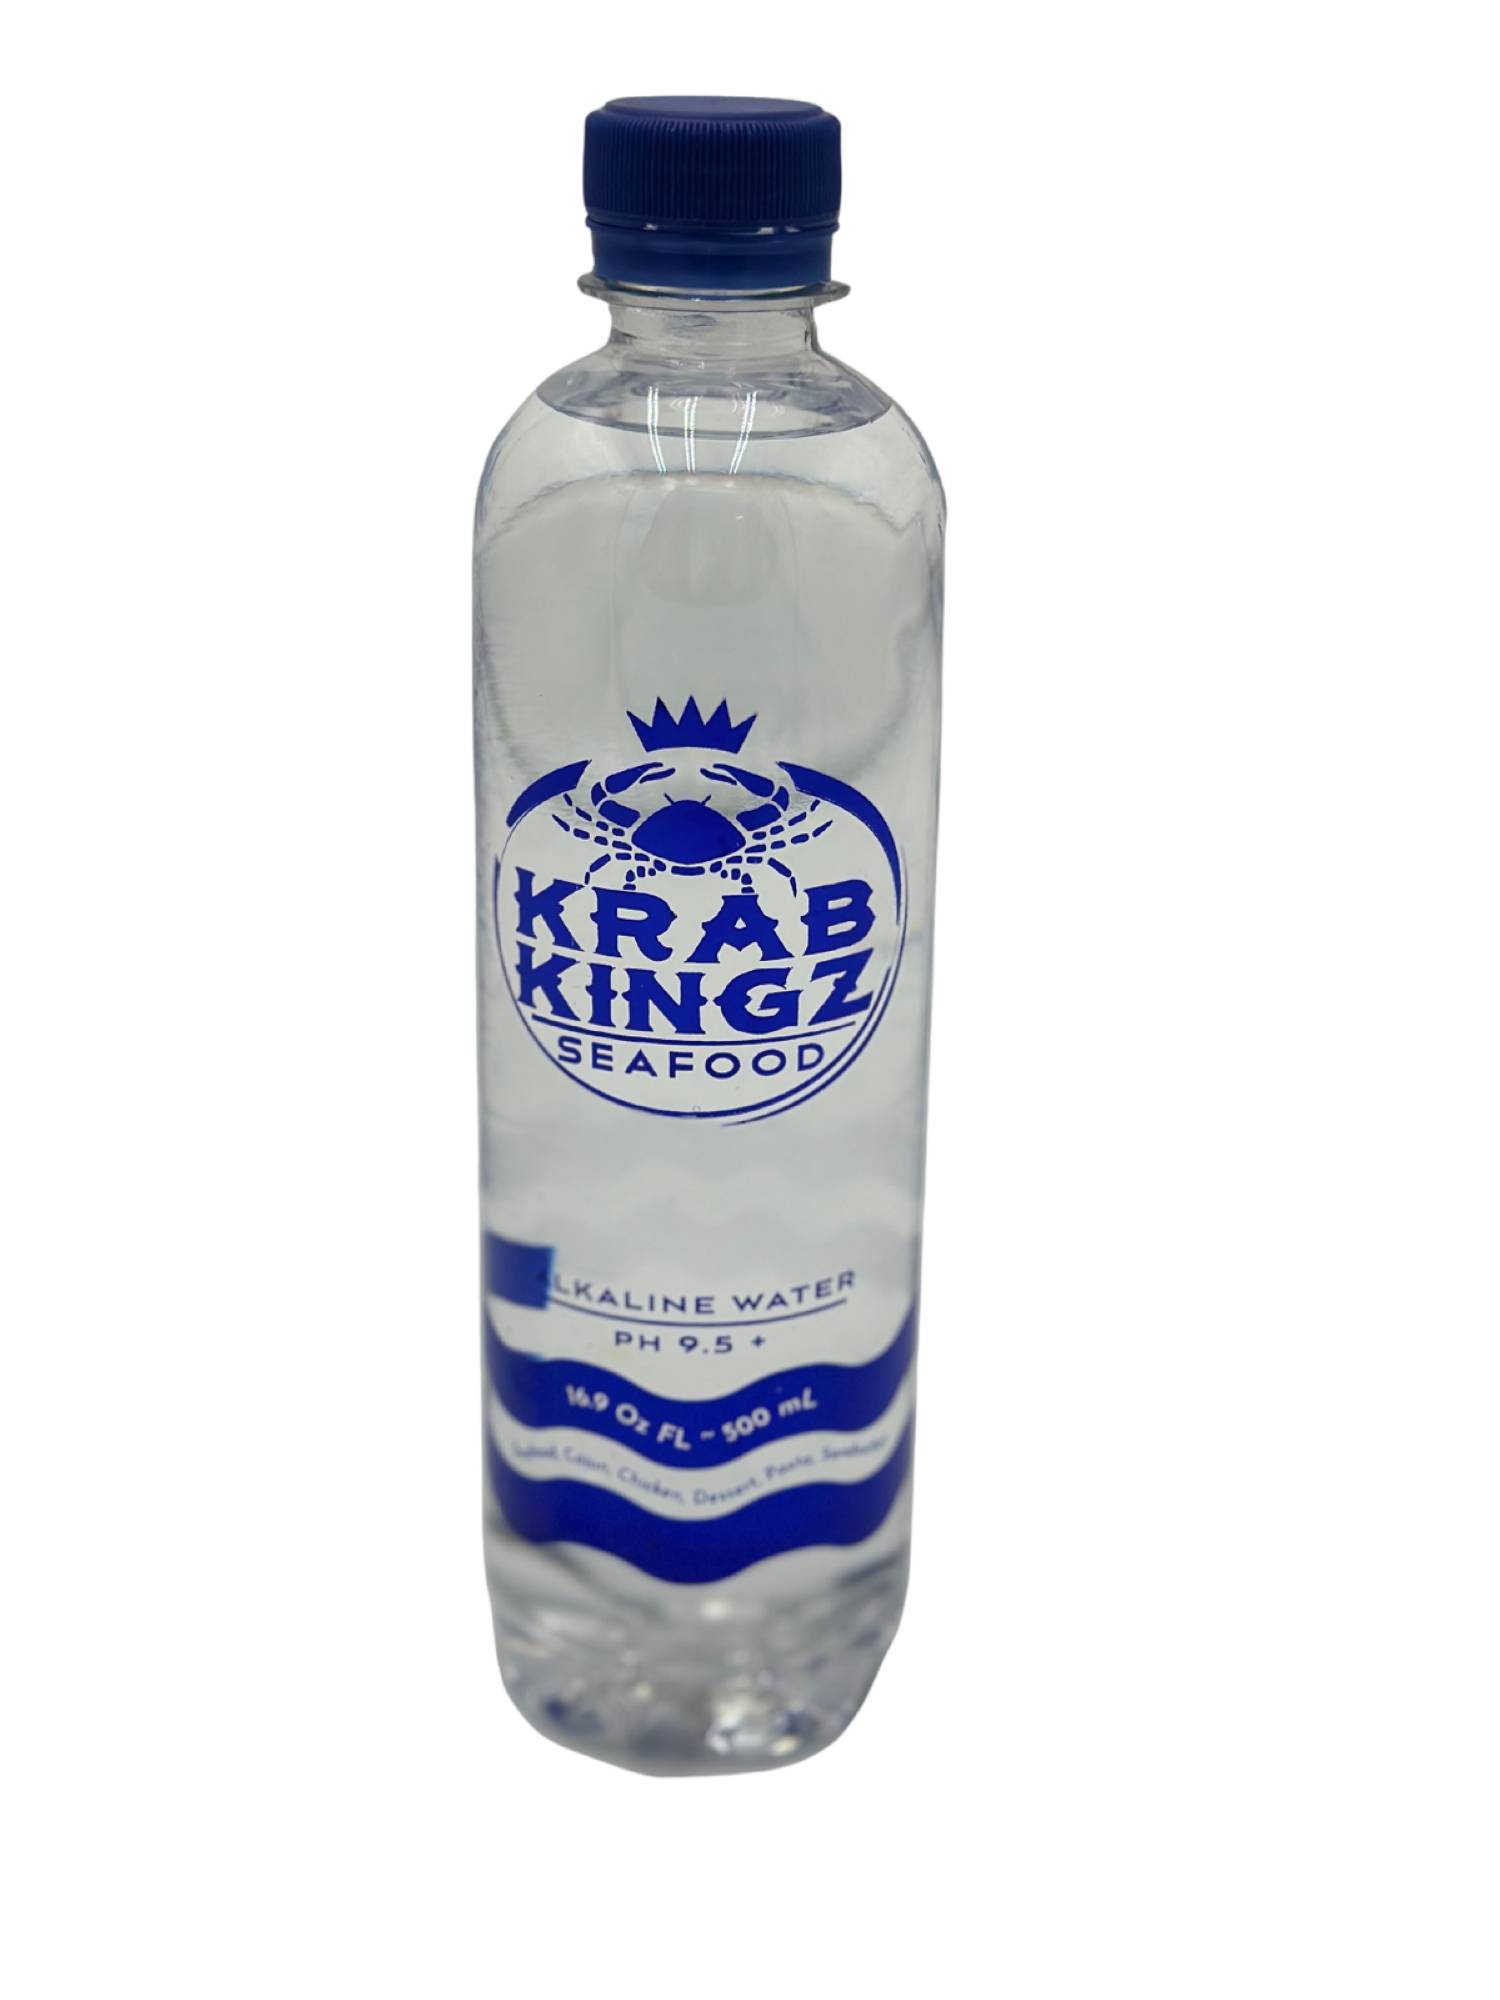 Krab Kingz Alkaline Water 